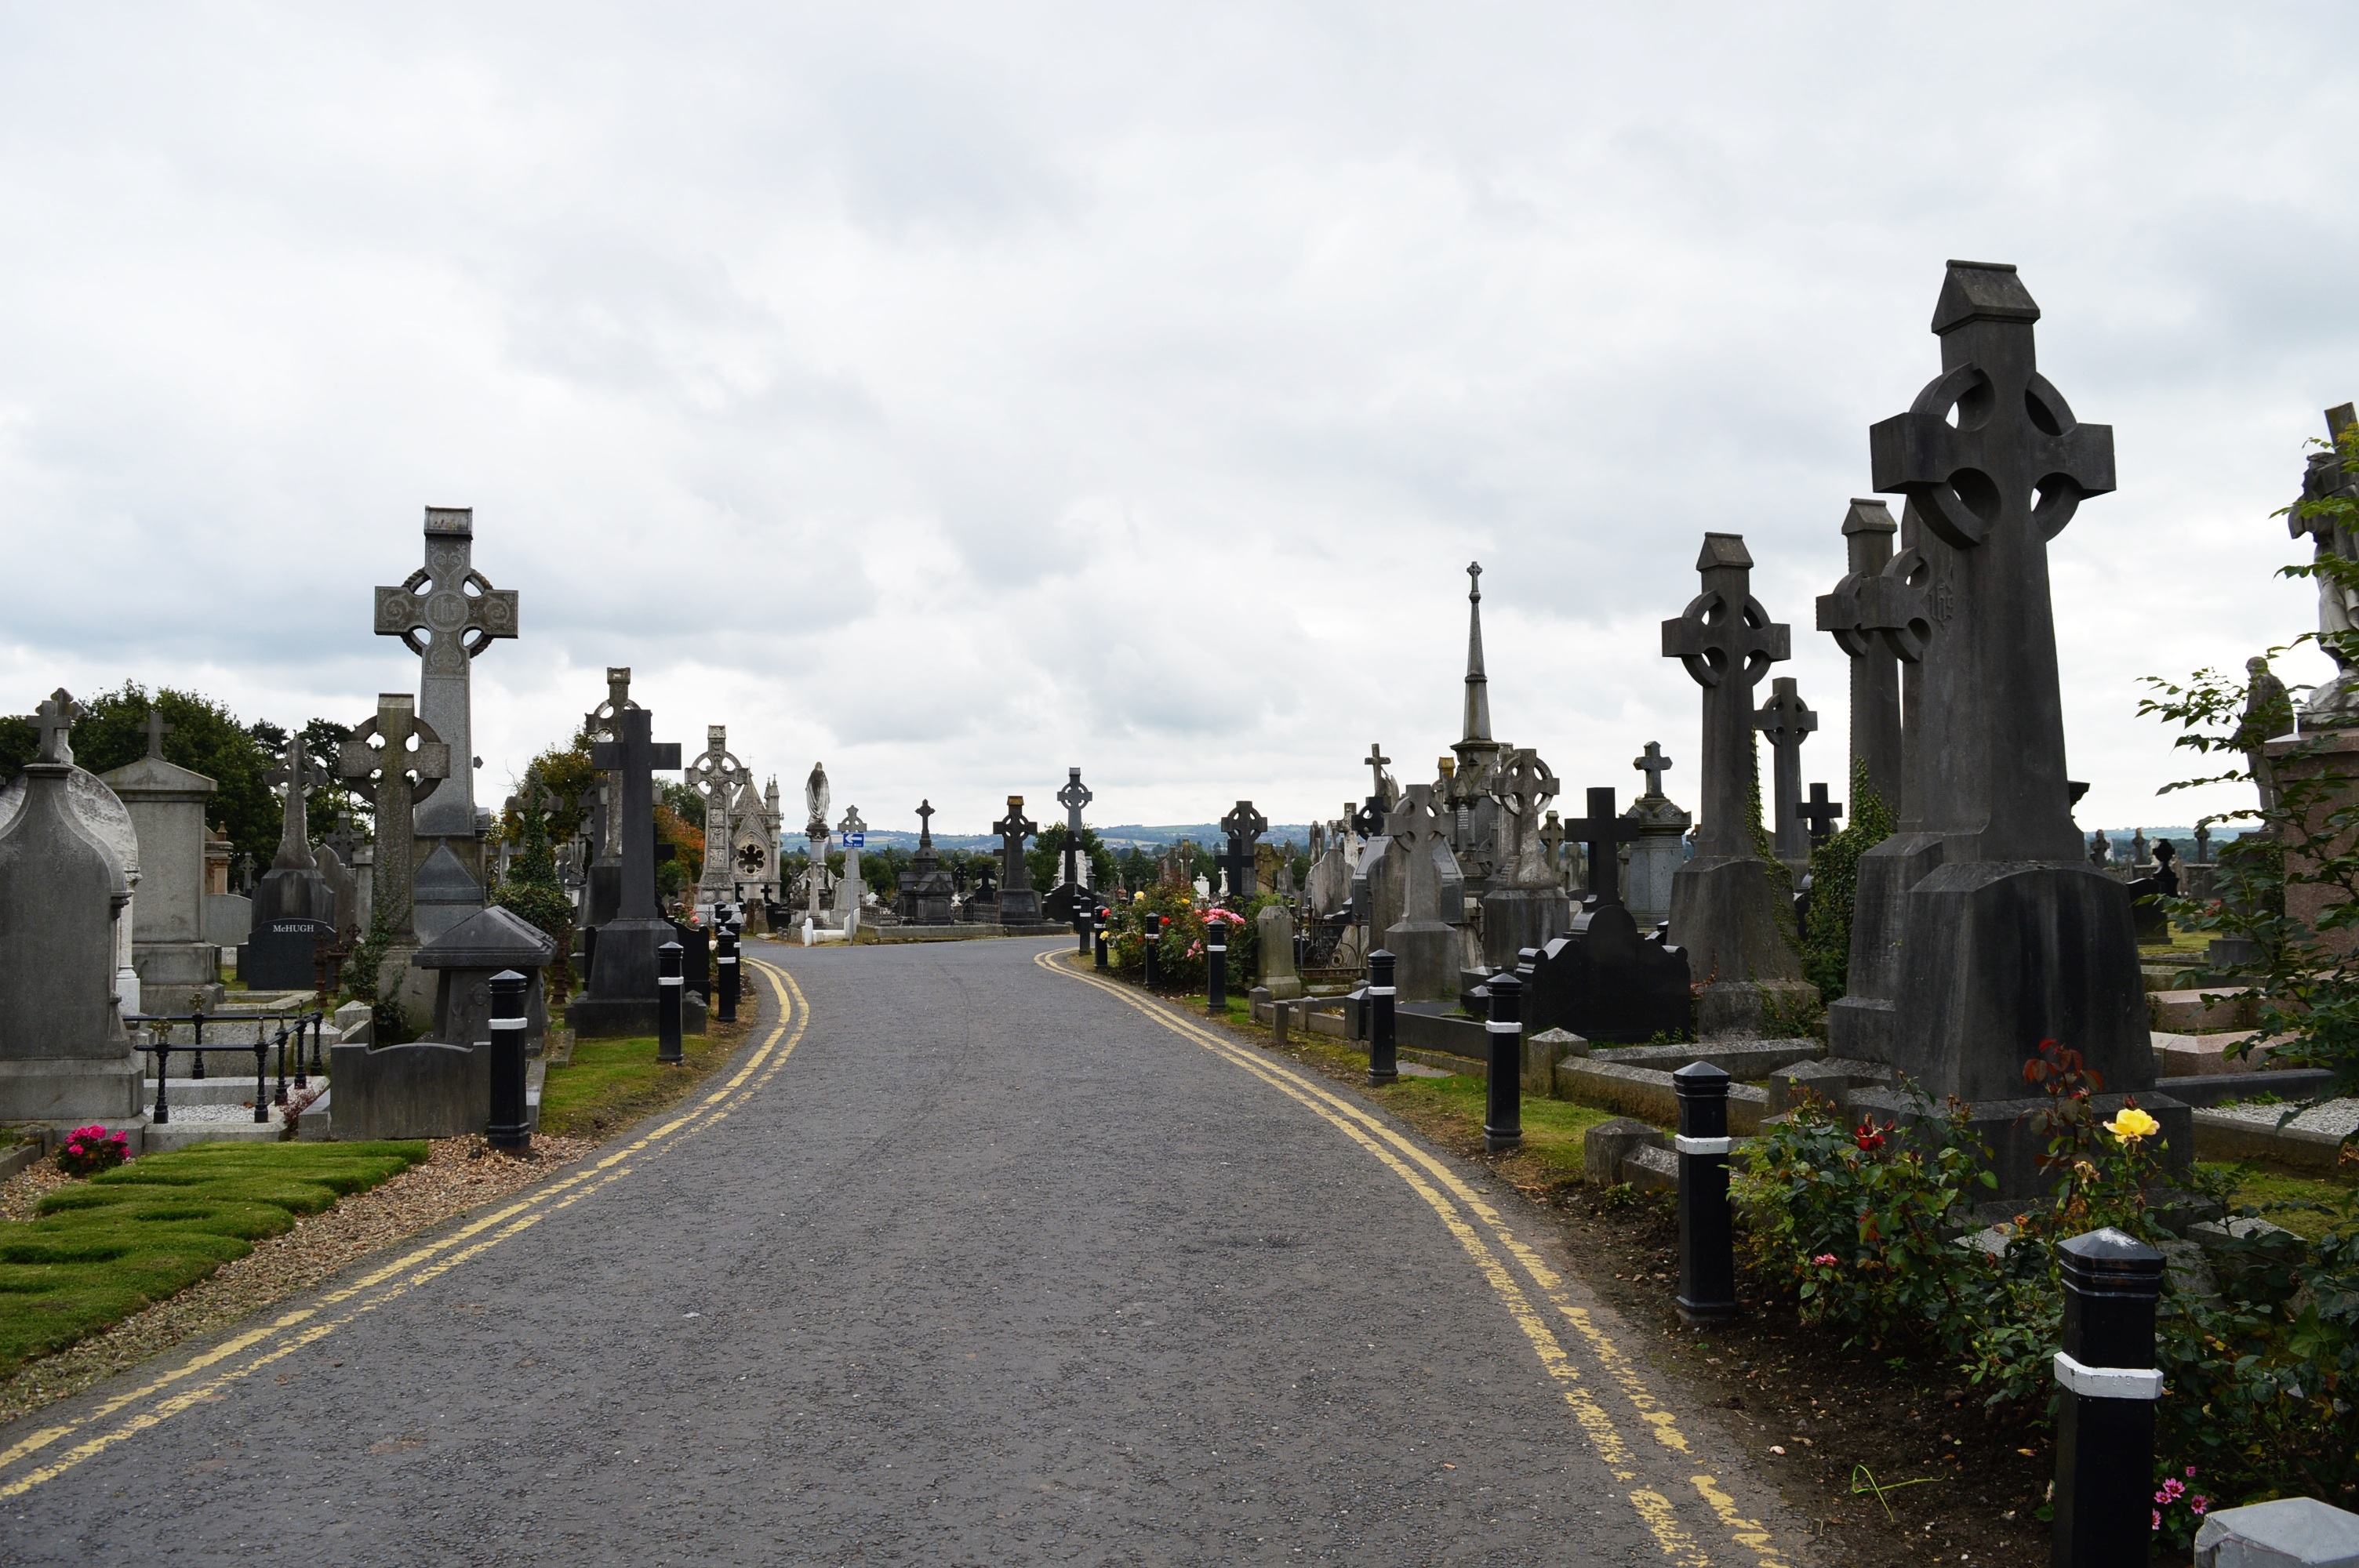 Cemetery Cross Grave Headstone Road 3008x2000